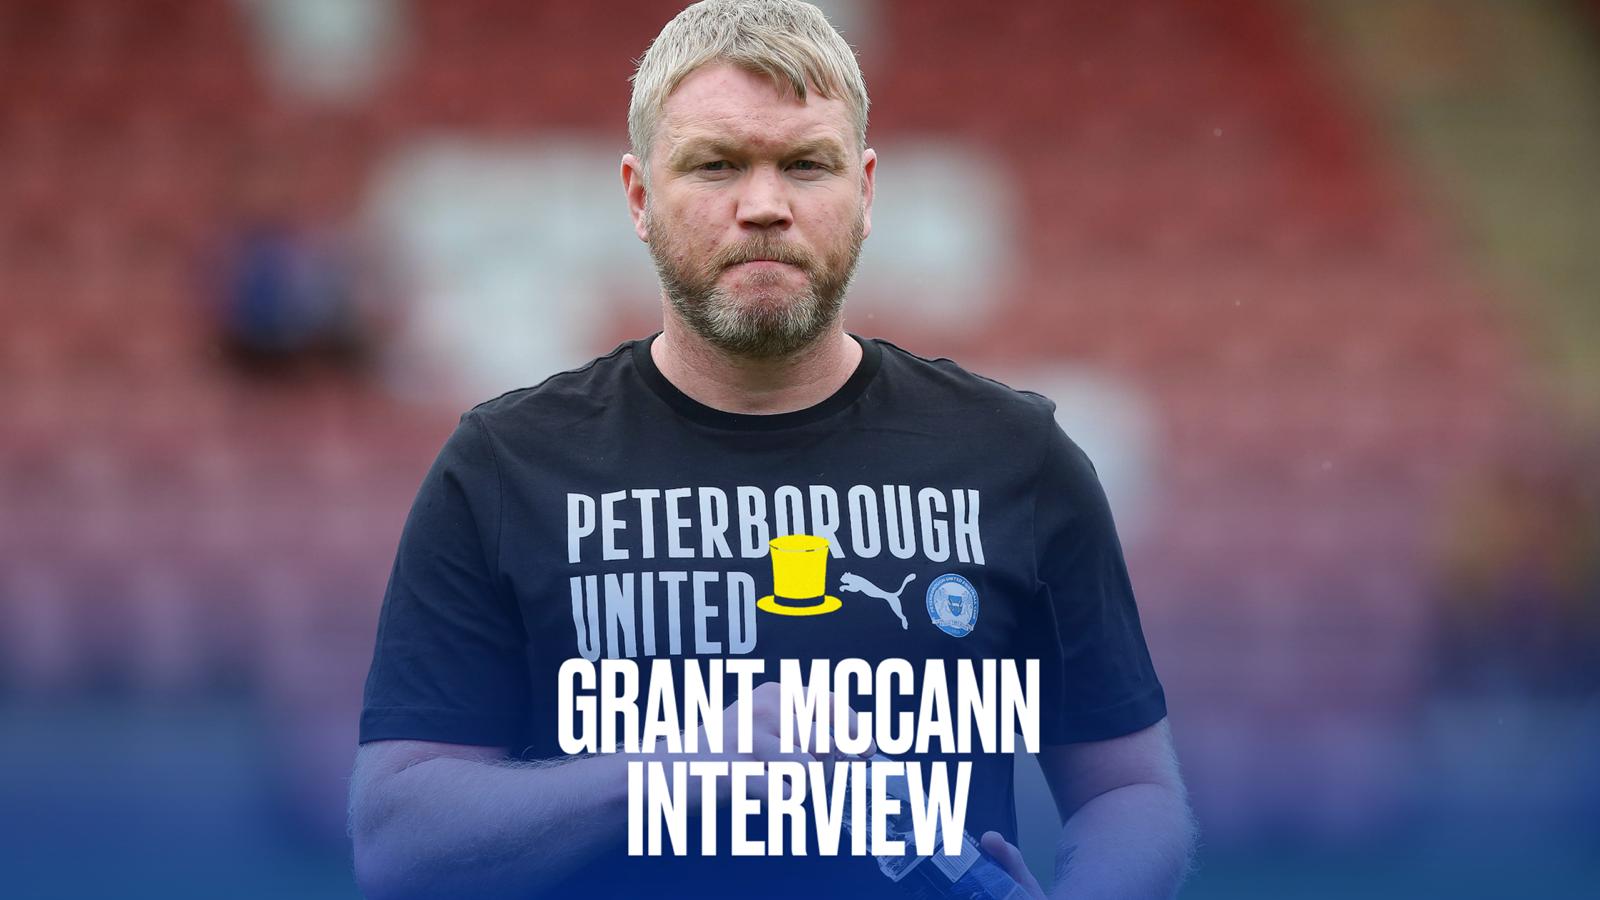 Grant McCann interview